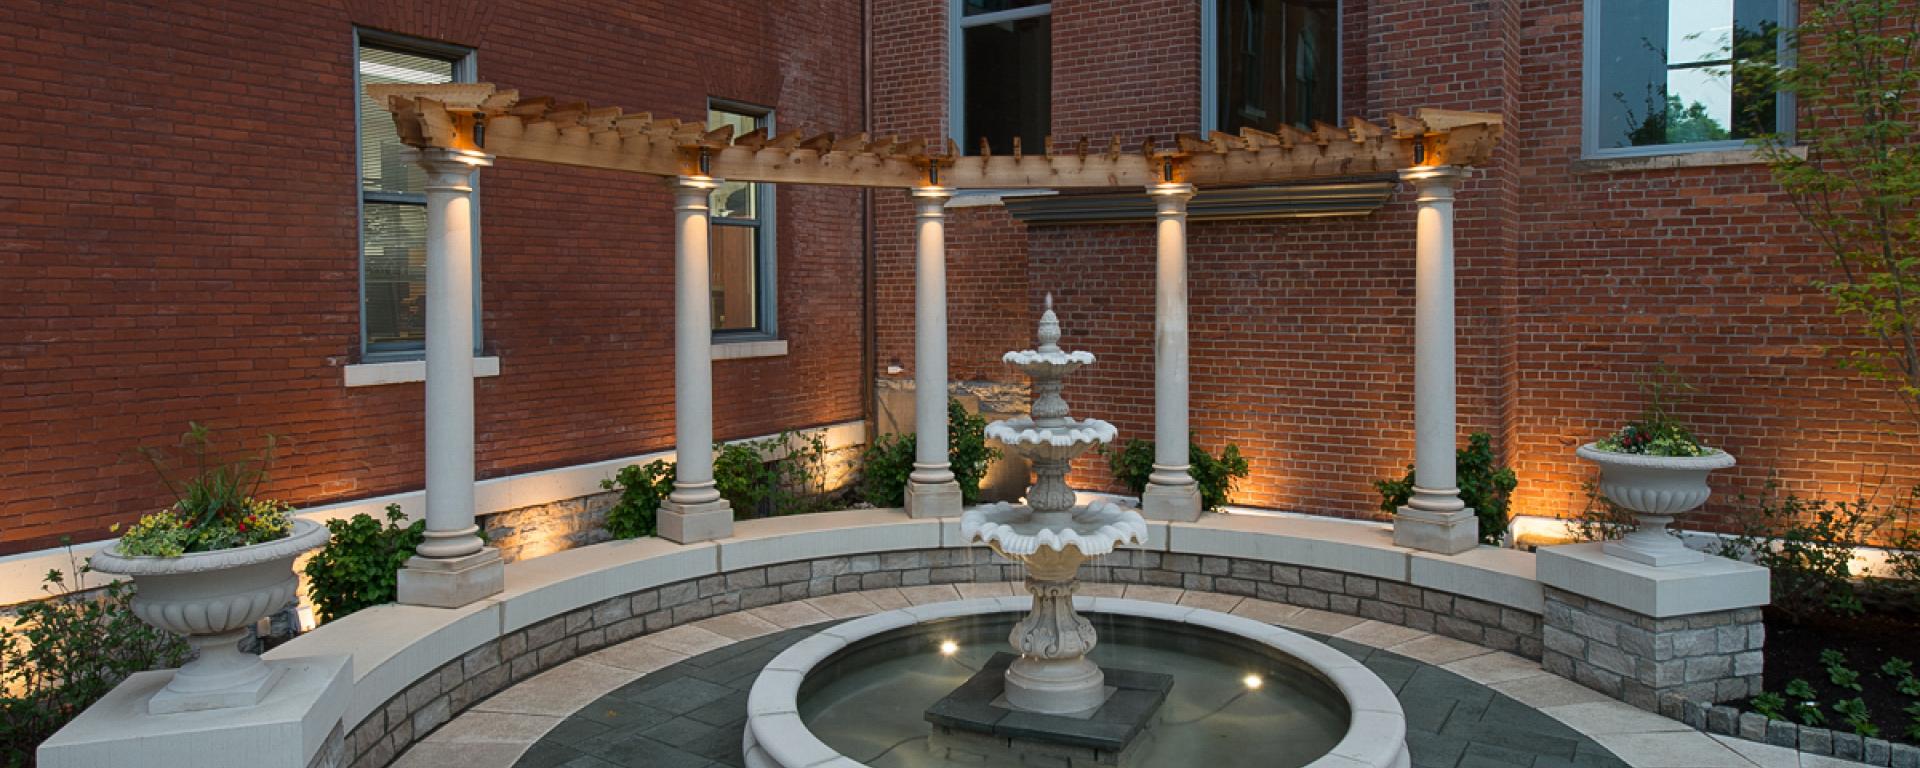 fountain in courtyard